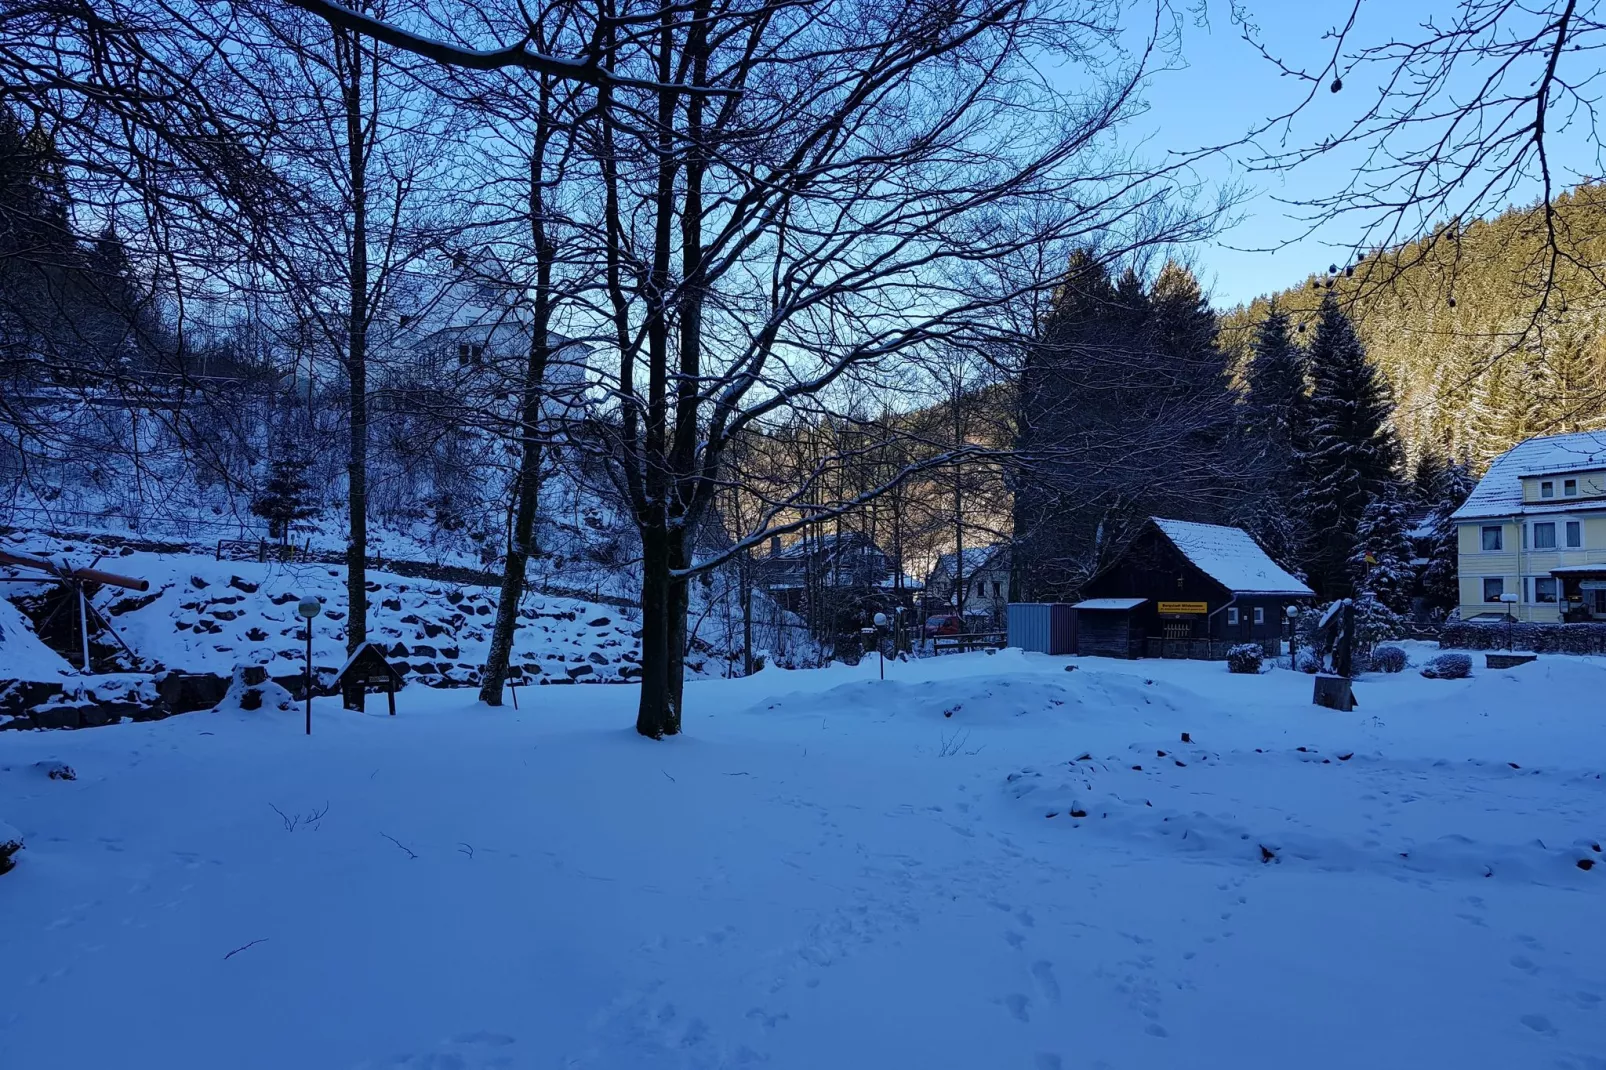 Spiegeltal-Gebied winter 1km